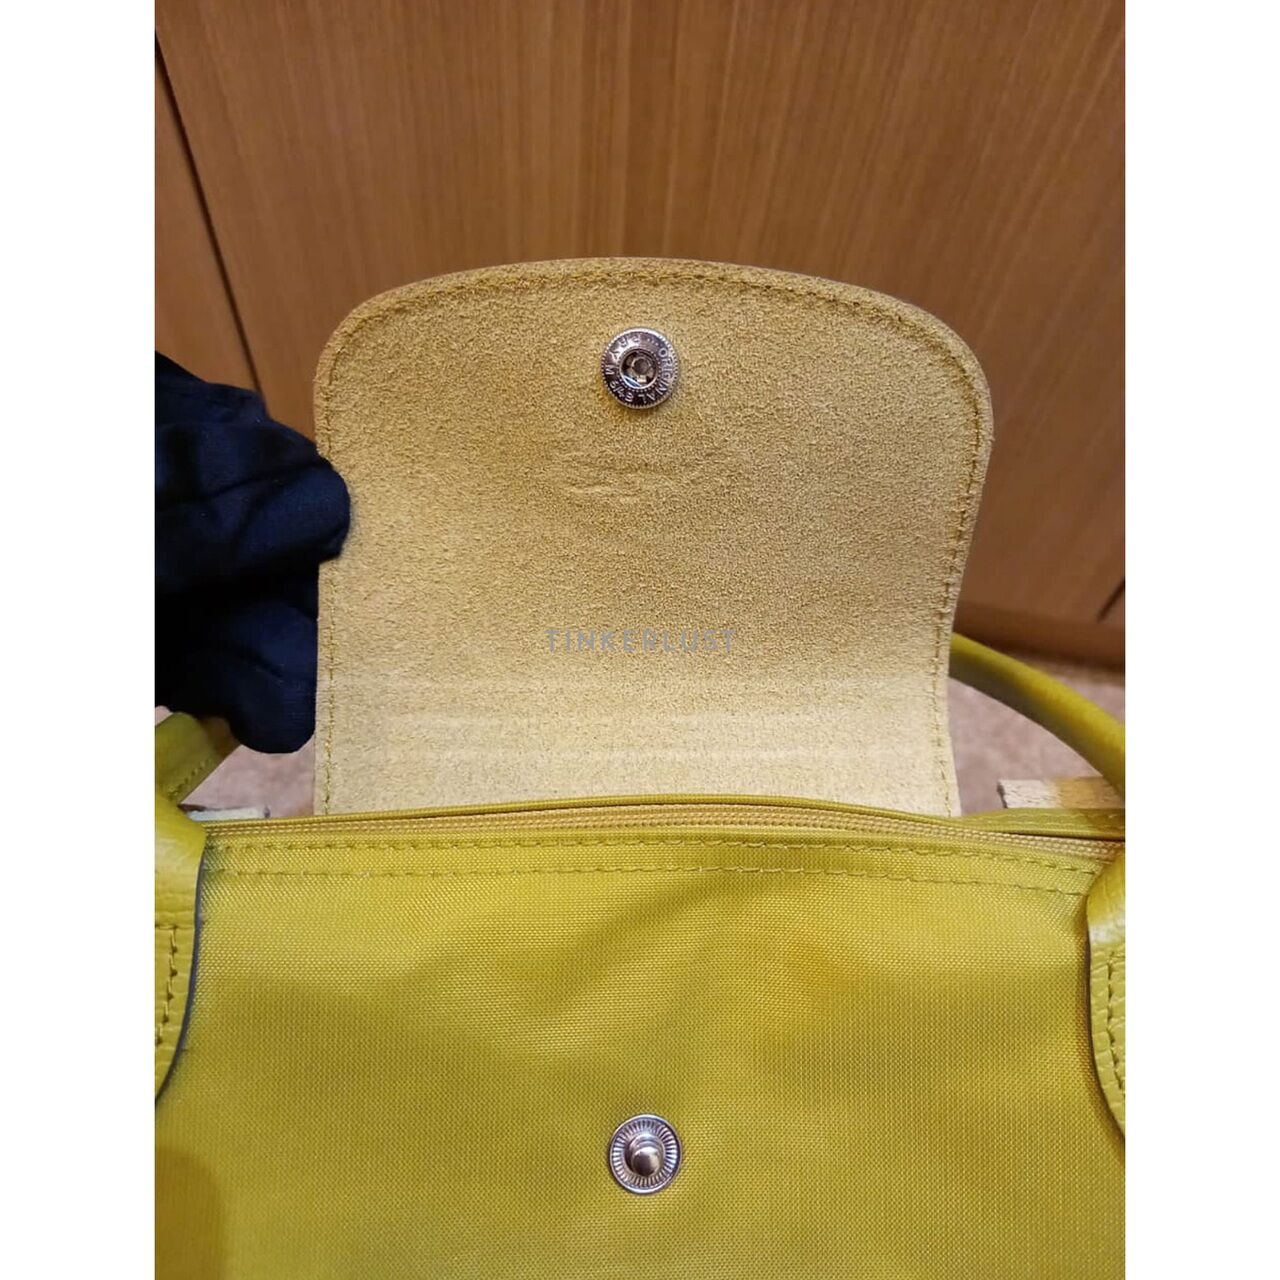 Longchamp Le Pliage Small Lime Tote Bag